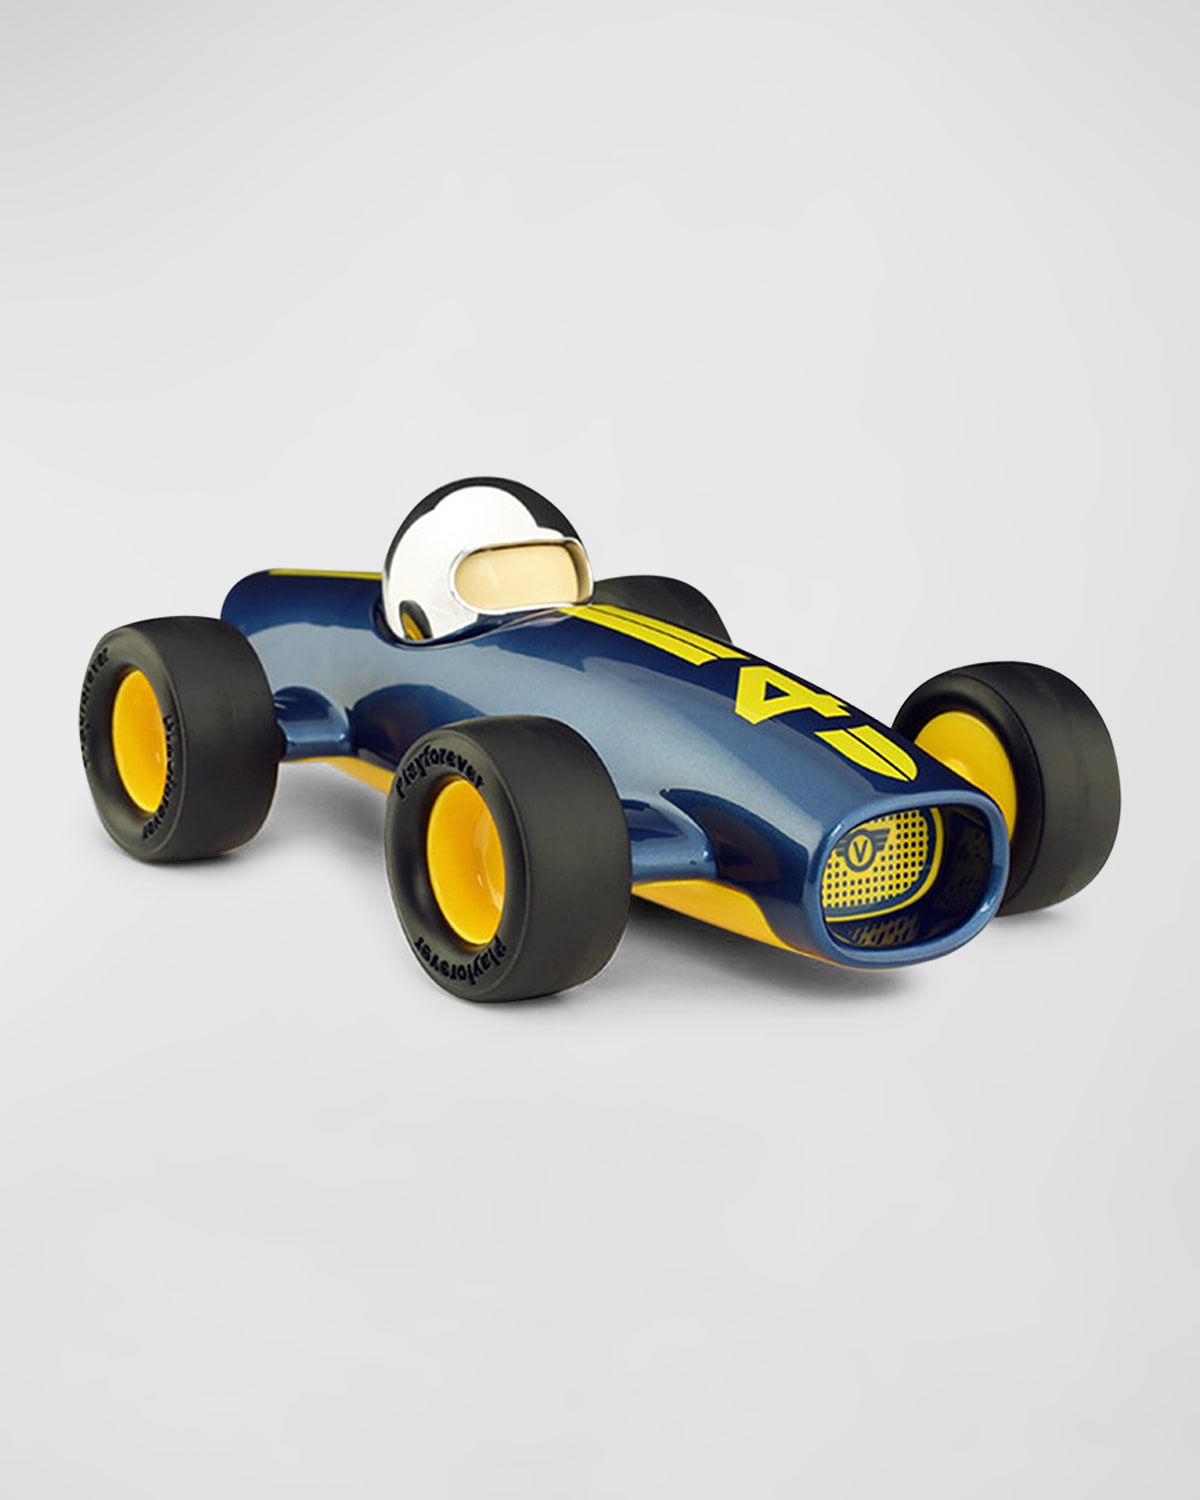 Malibu Race Car Toy